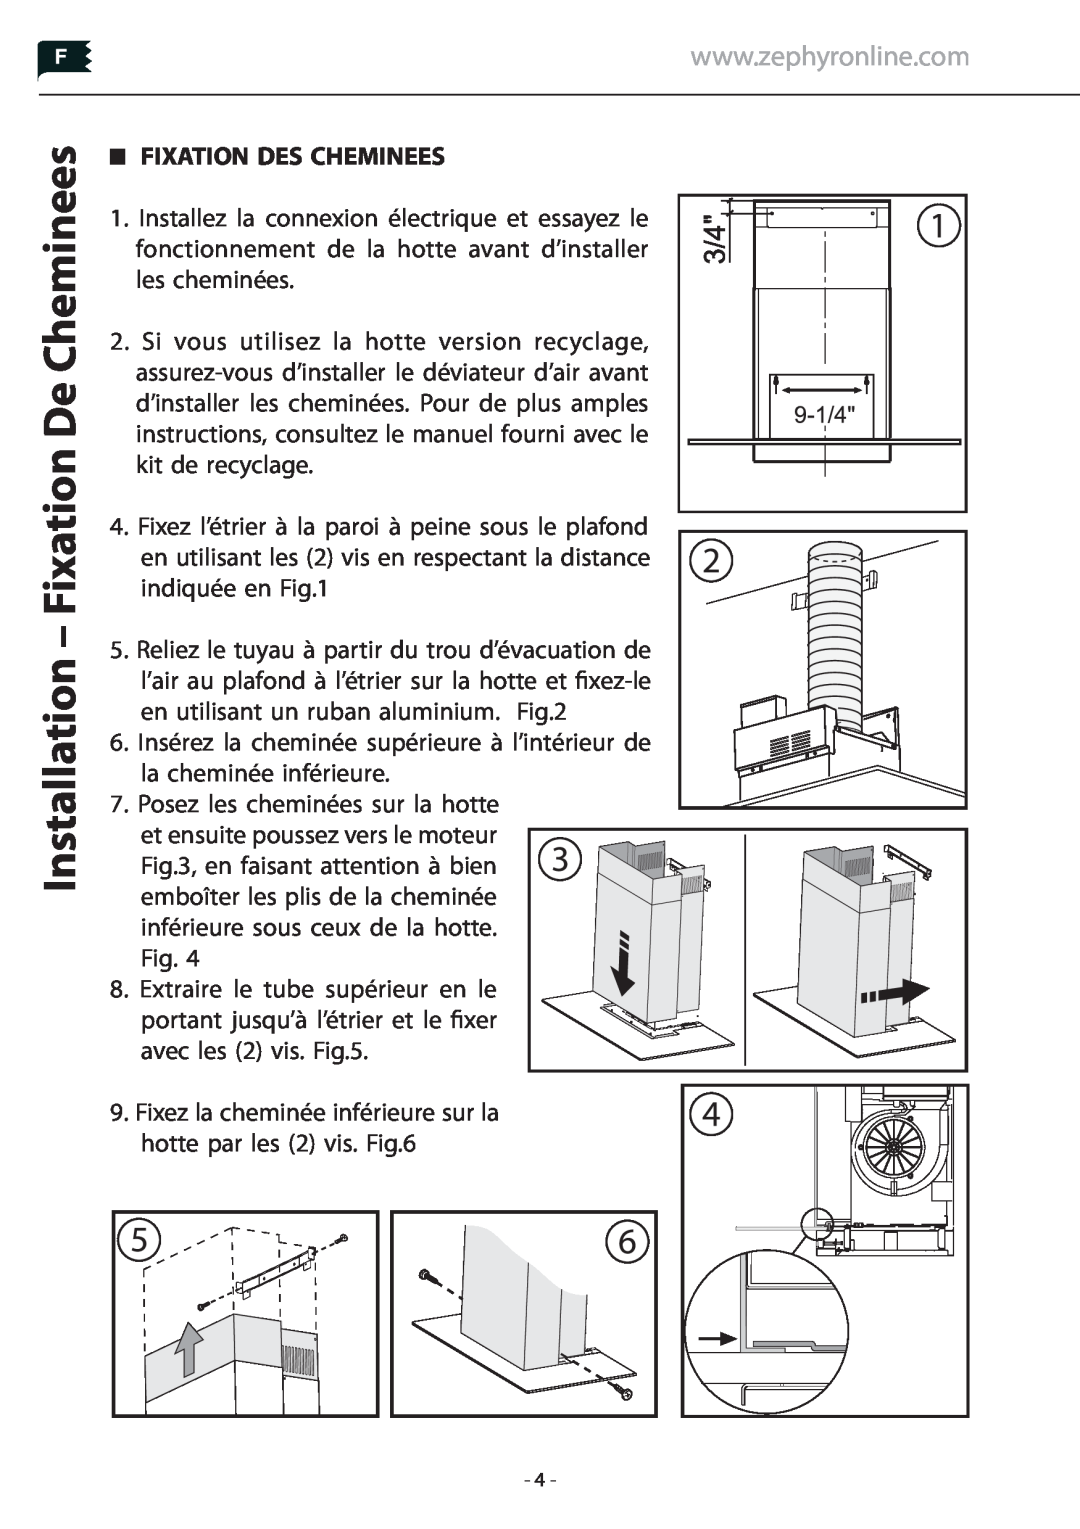 Zephyr Z1C-00SU manual Installation - Fixation De Cheminees, Fixation Des Cheminees 